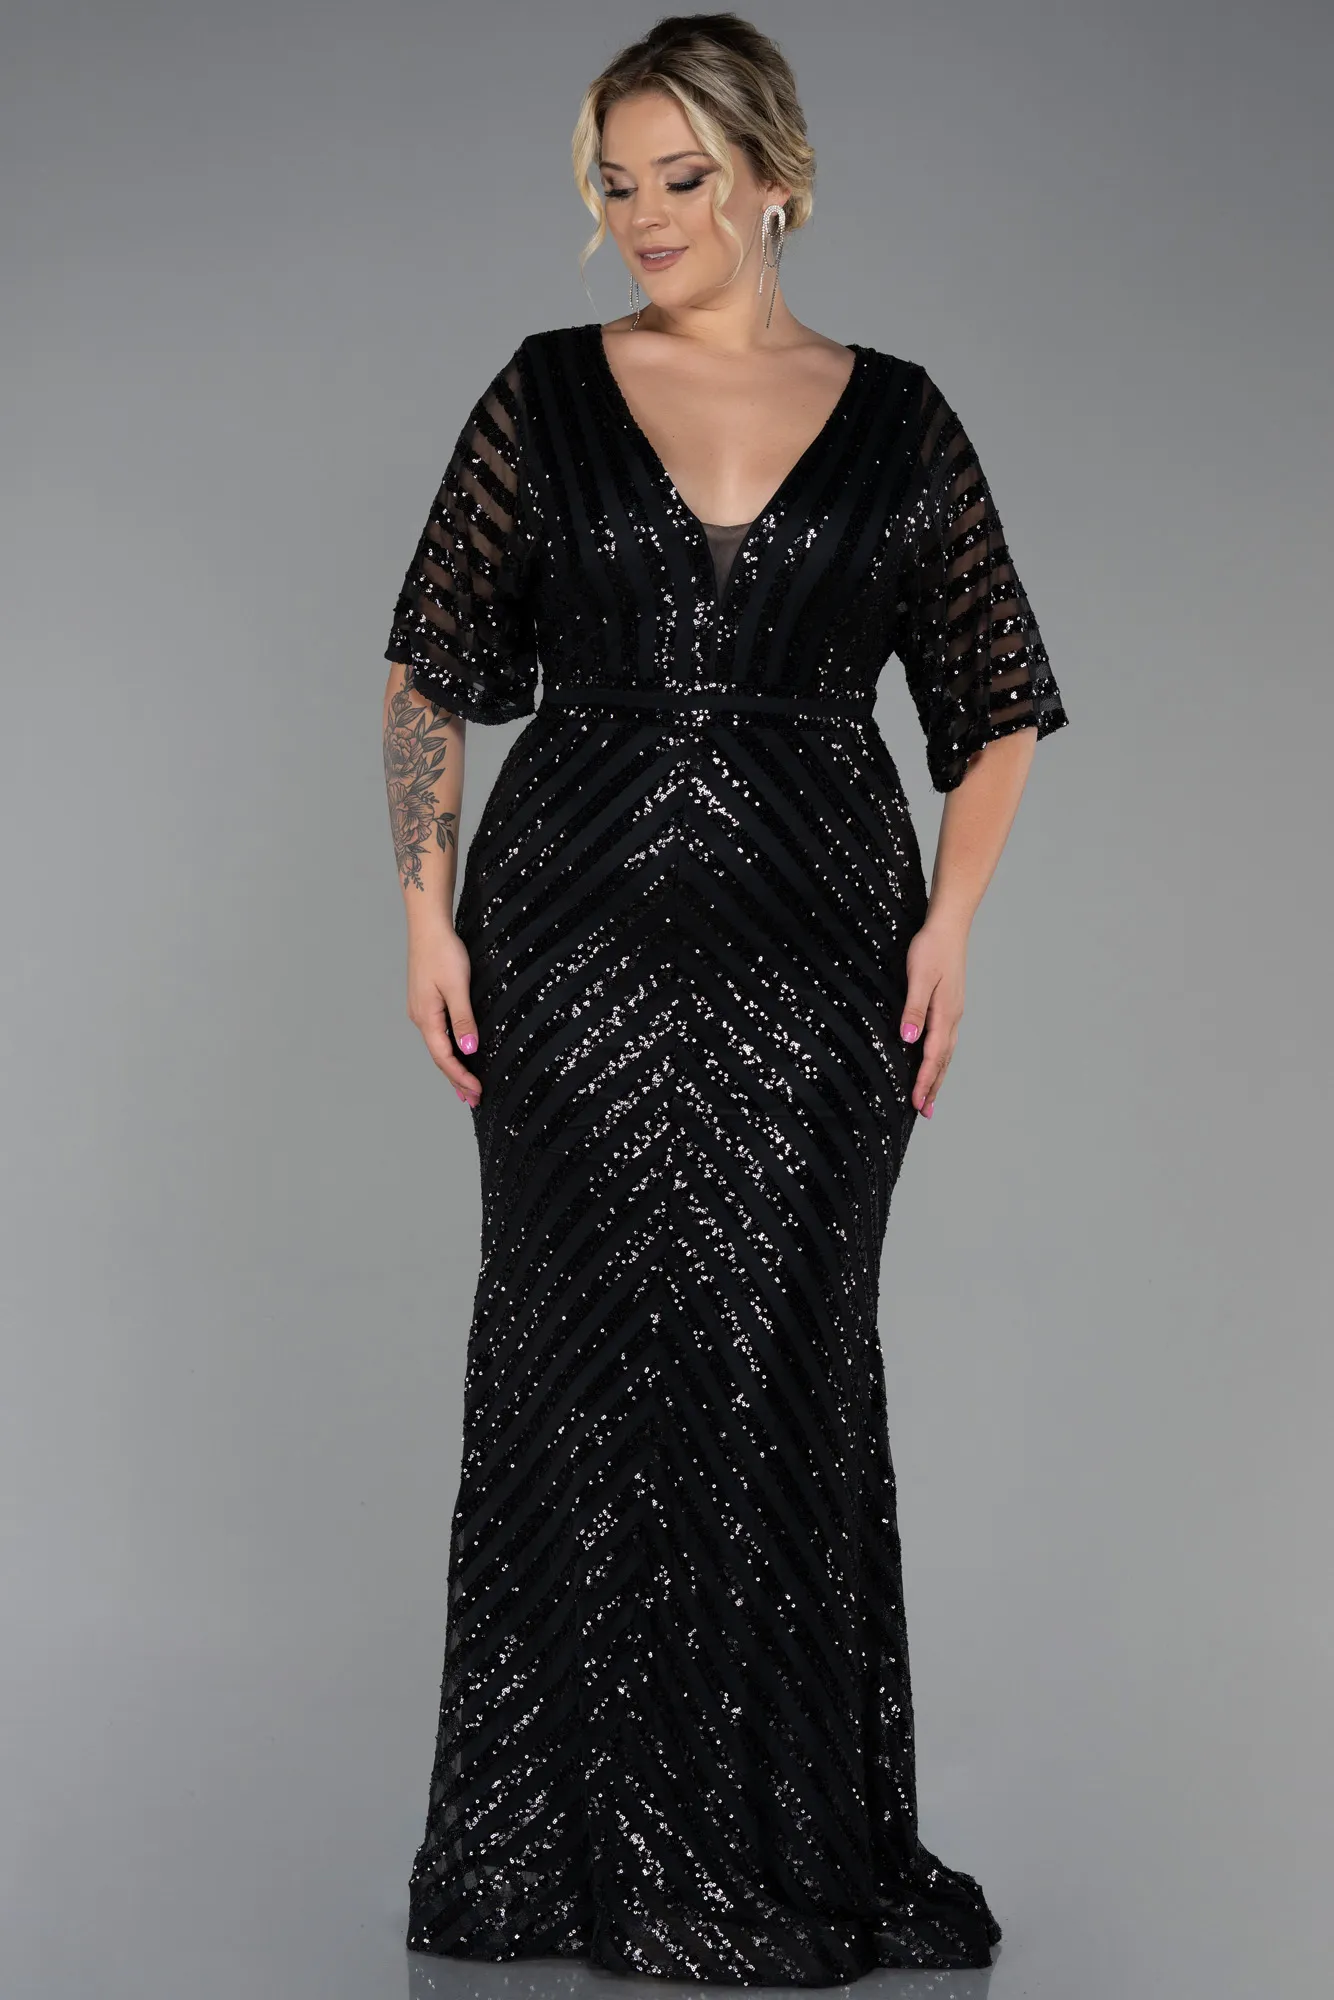 Black-Long Plus Size Evening Dress ABU900